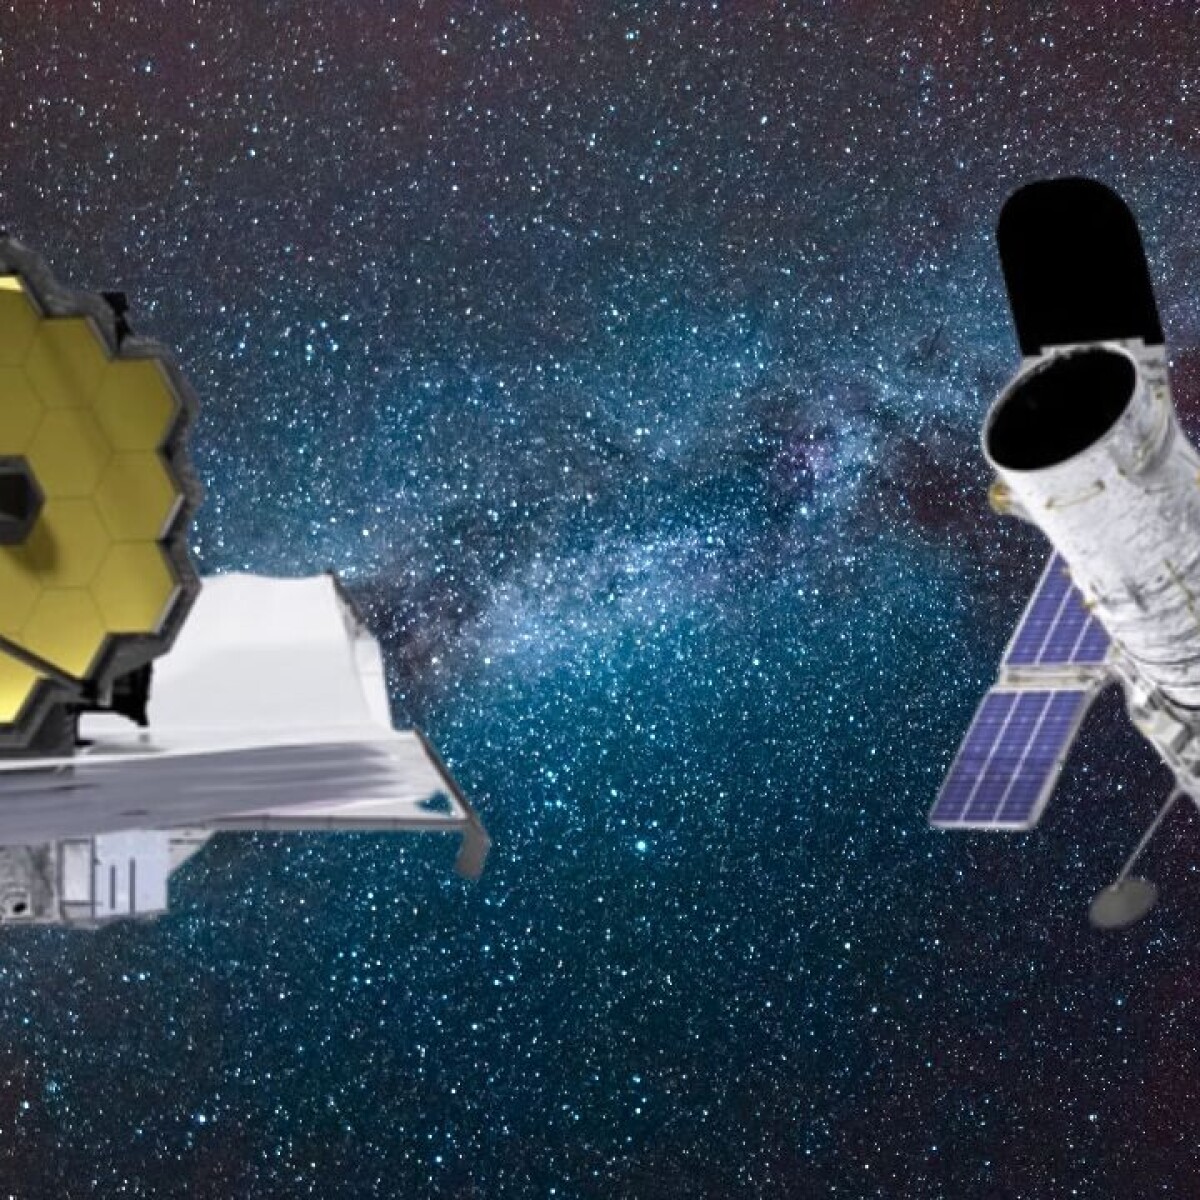 Reisbureau genoeg Perceptie James Webb vs. Hubble: Compare their images side-by-side